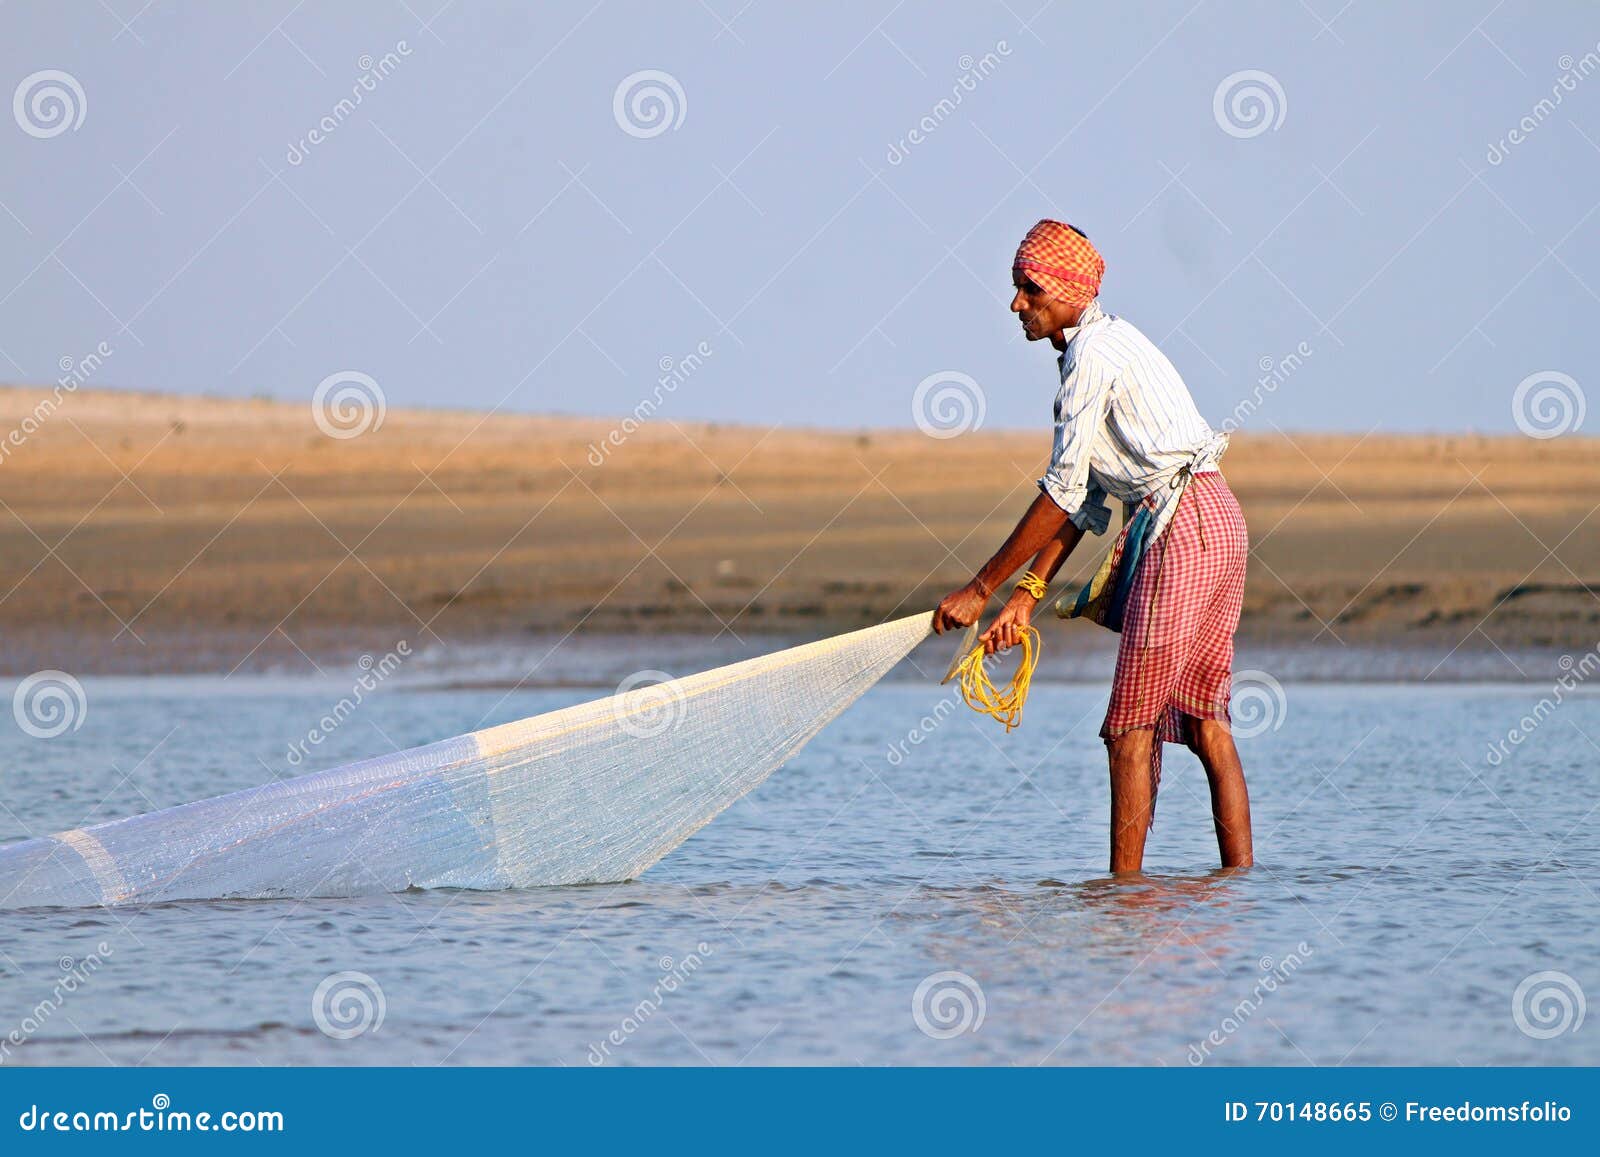 1,330 Indian Fisherman Fishing River Stock Photos - Free & Royalty